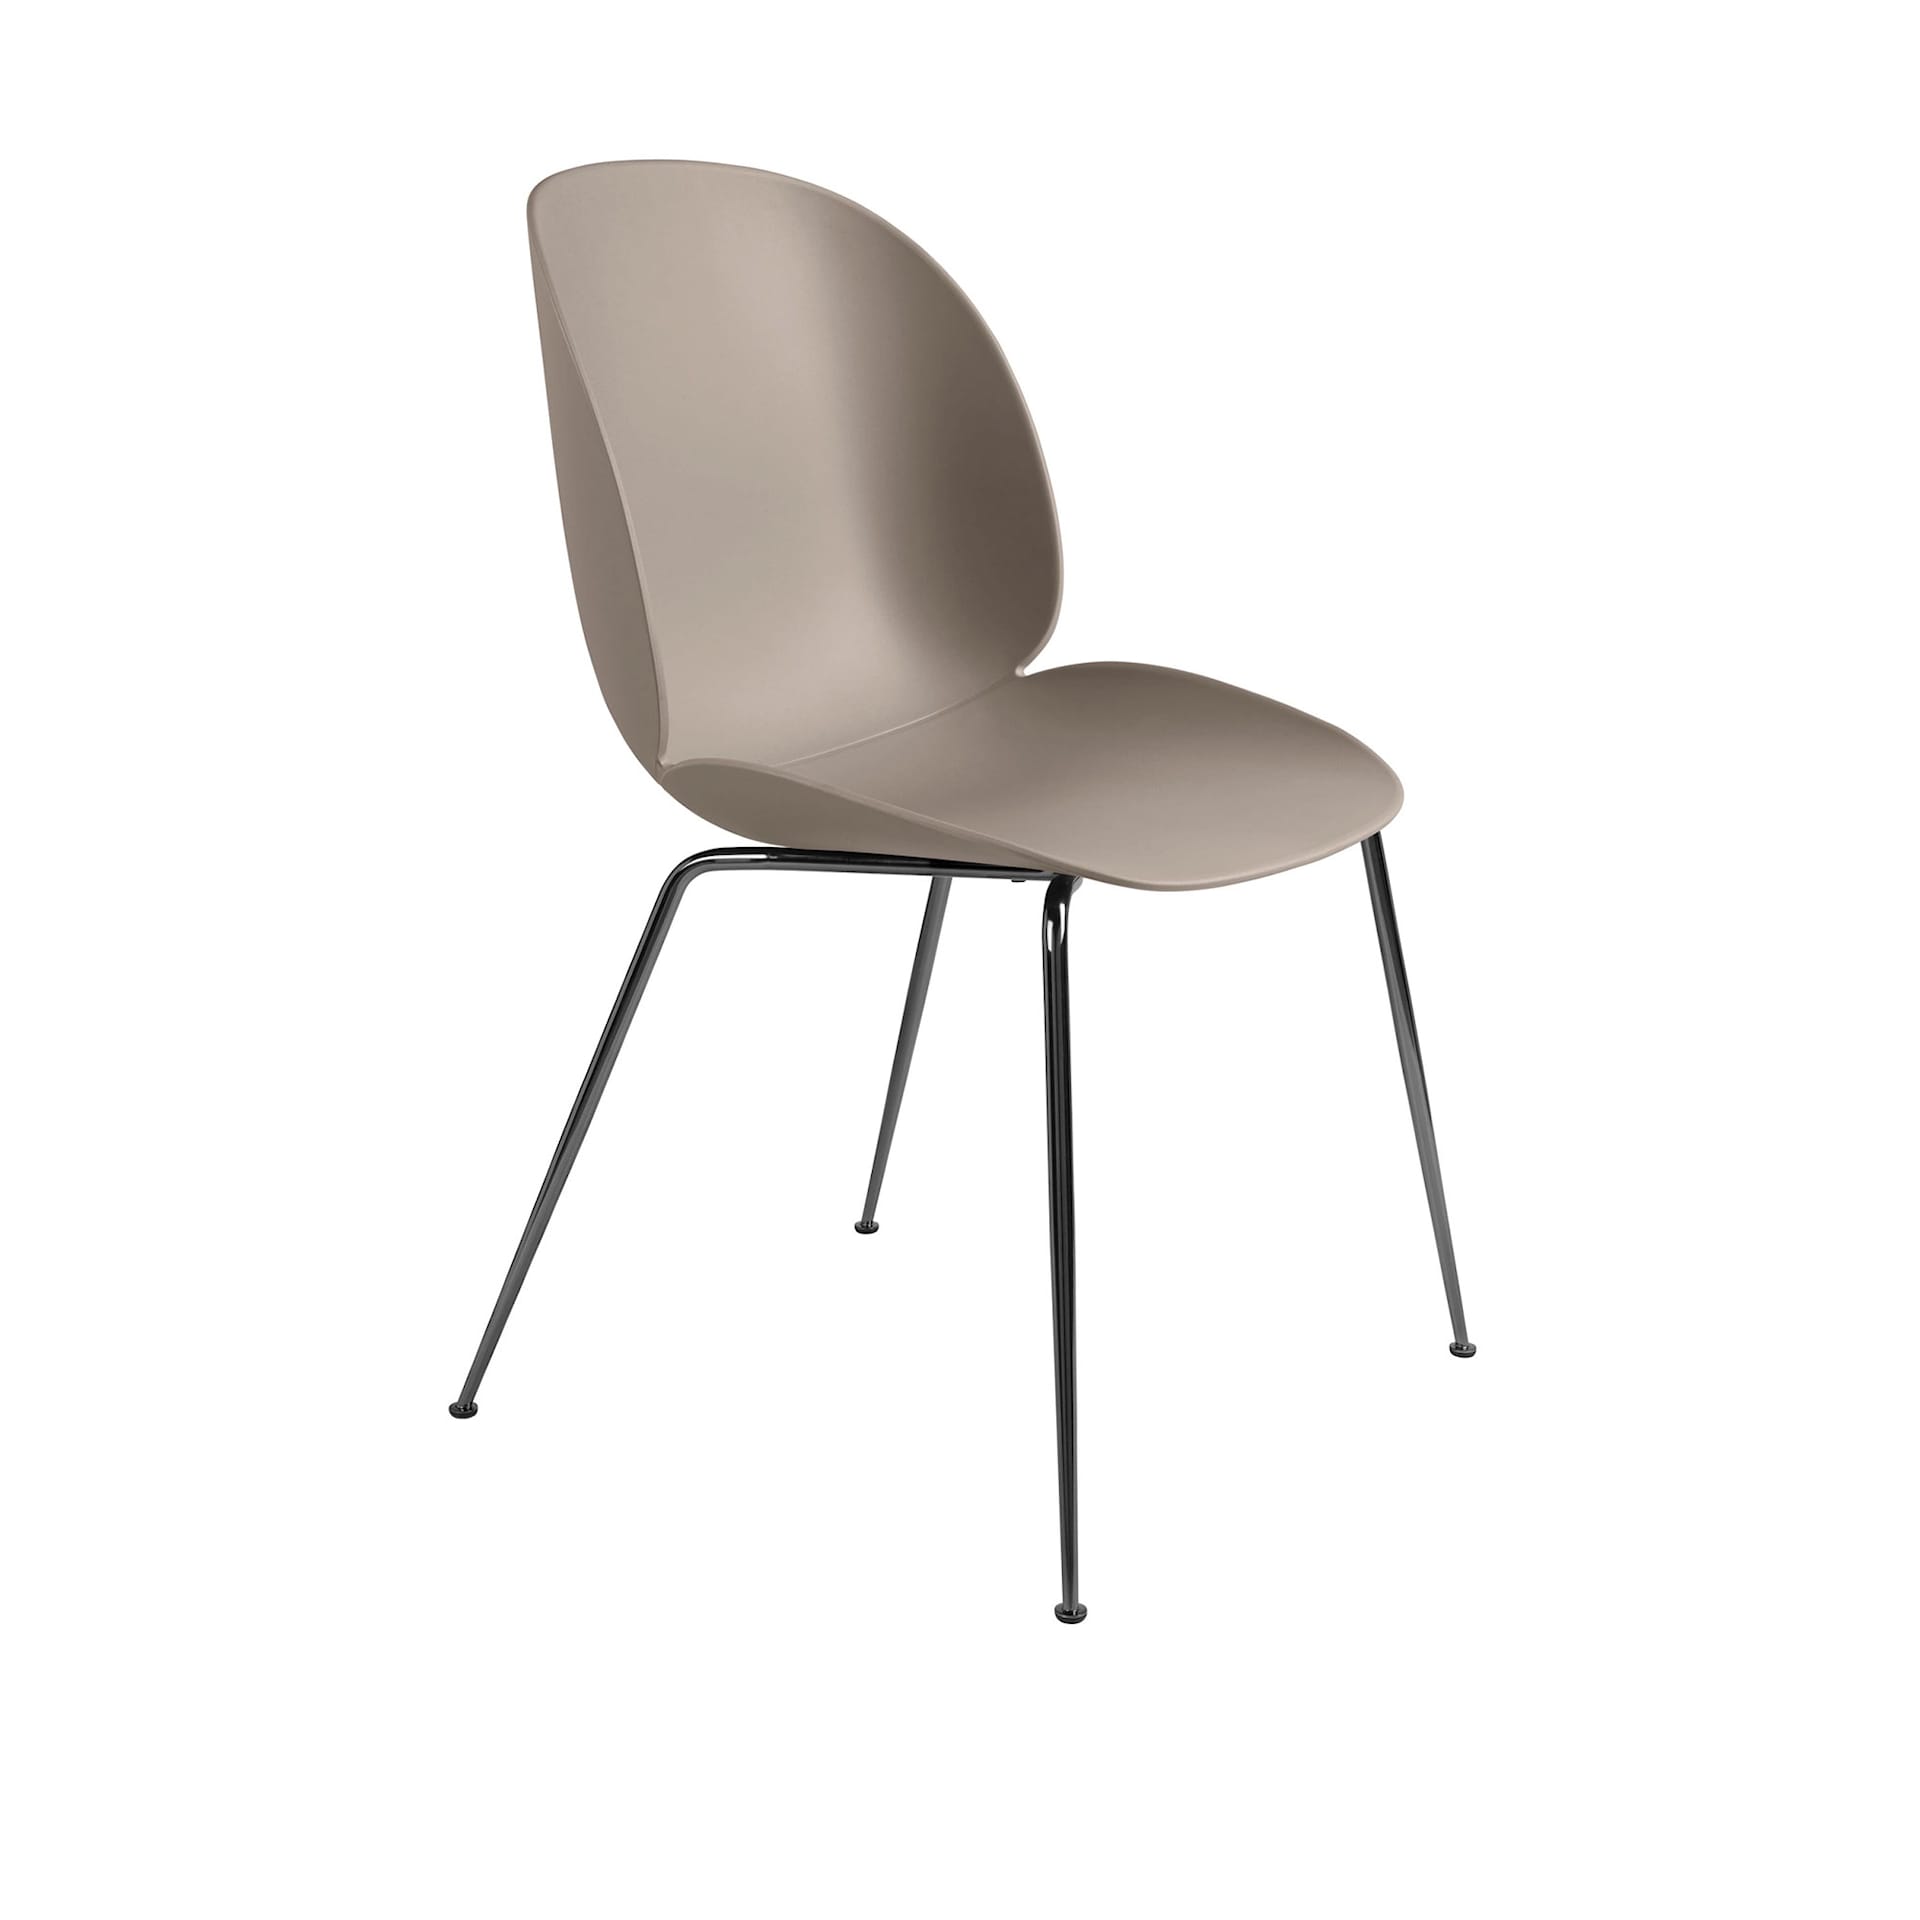 Beetle Dining Chair Conic Base Black - Un-Upholstered - Gubi - GamFratesi - NO GA